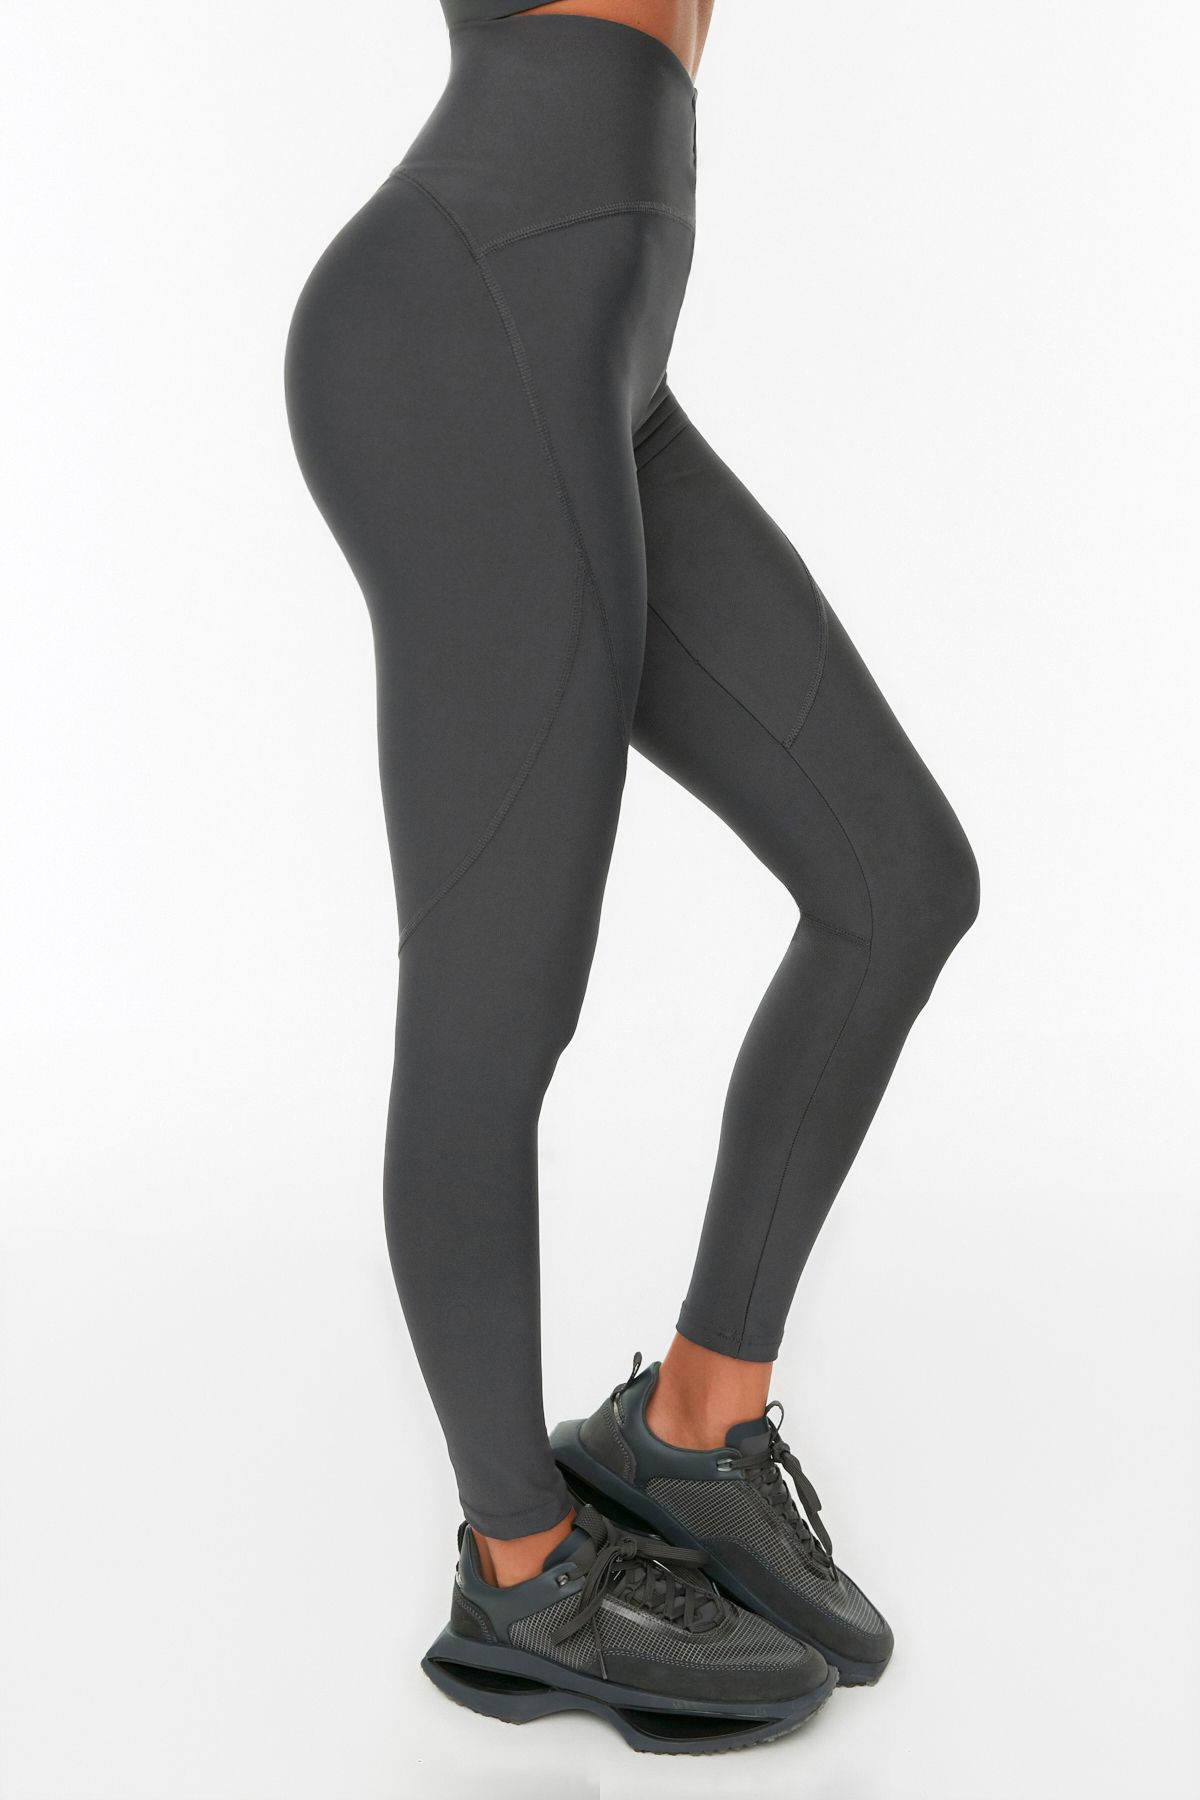 KaSheHa Black Women Leggings Styles, Prices - Trendyol